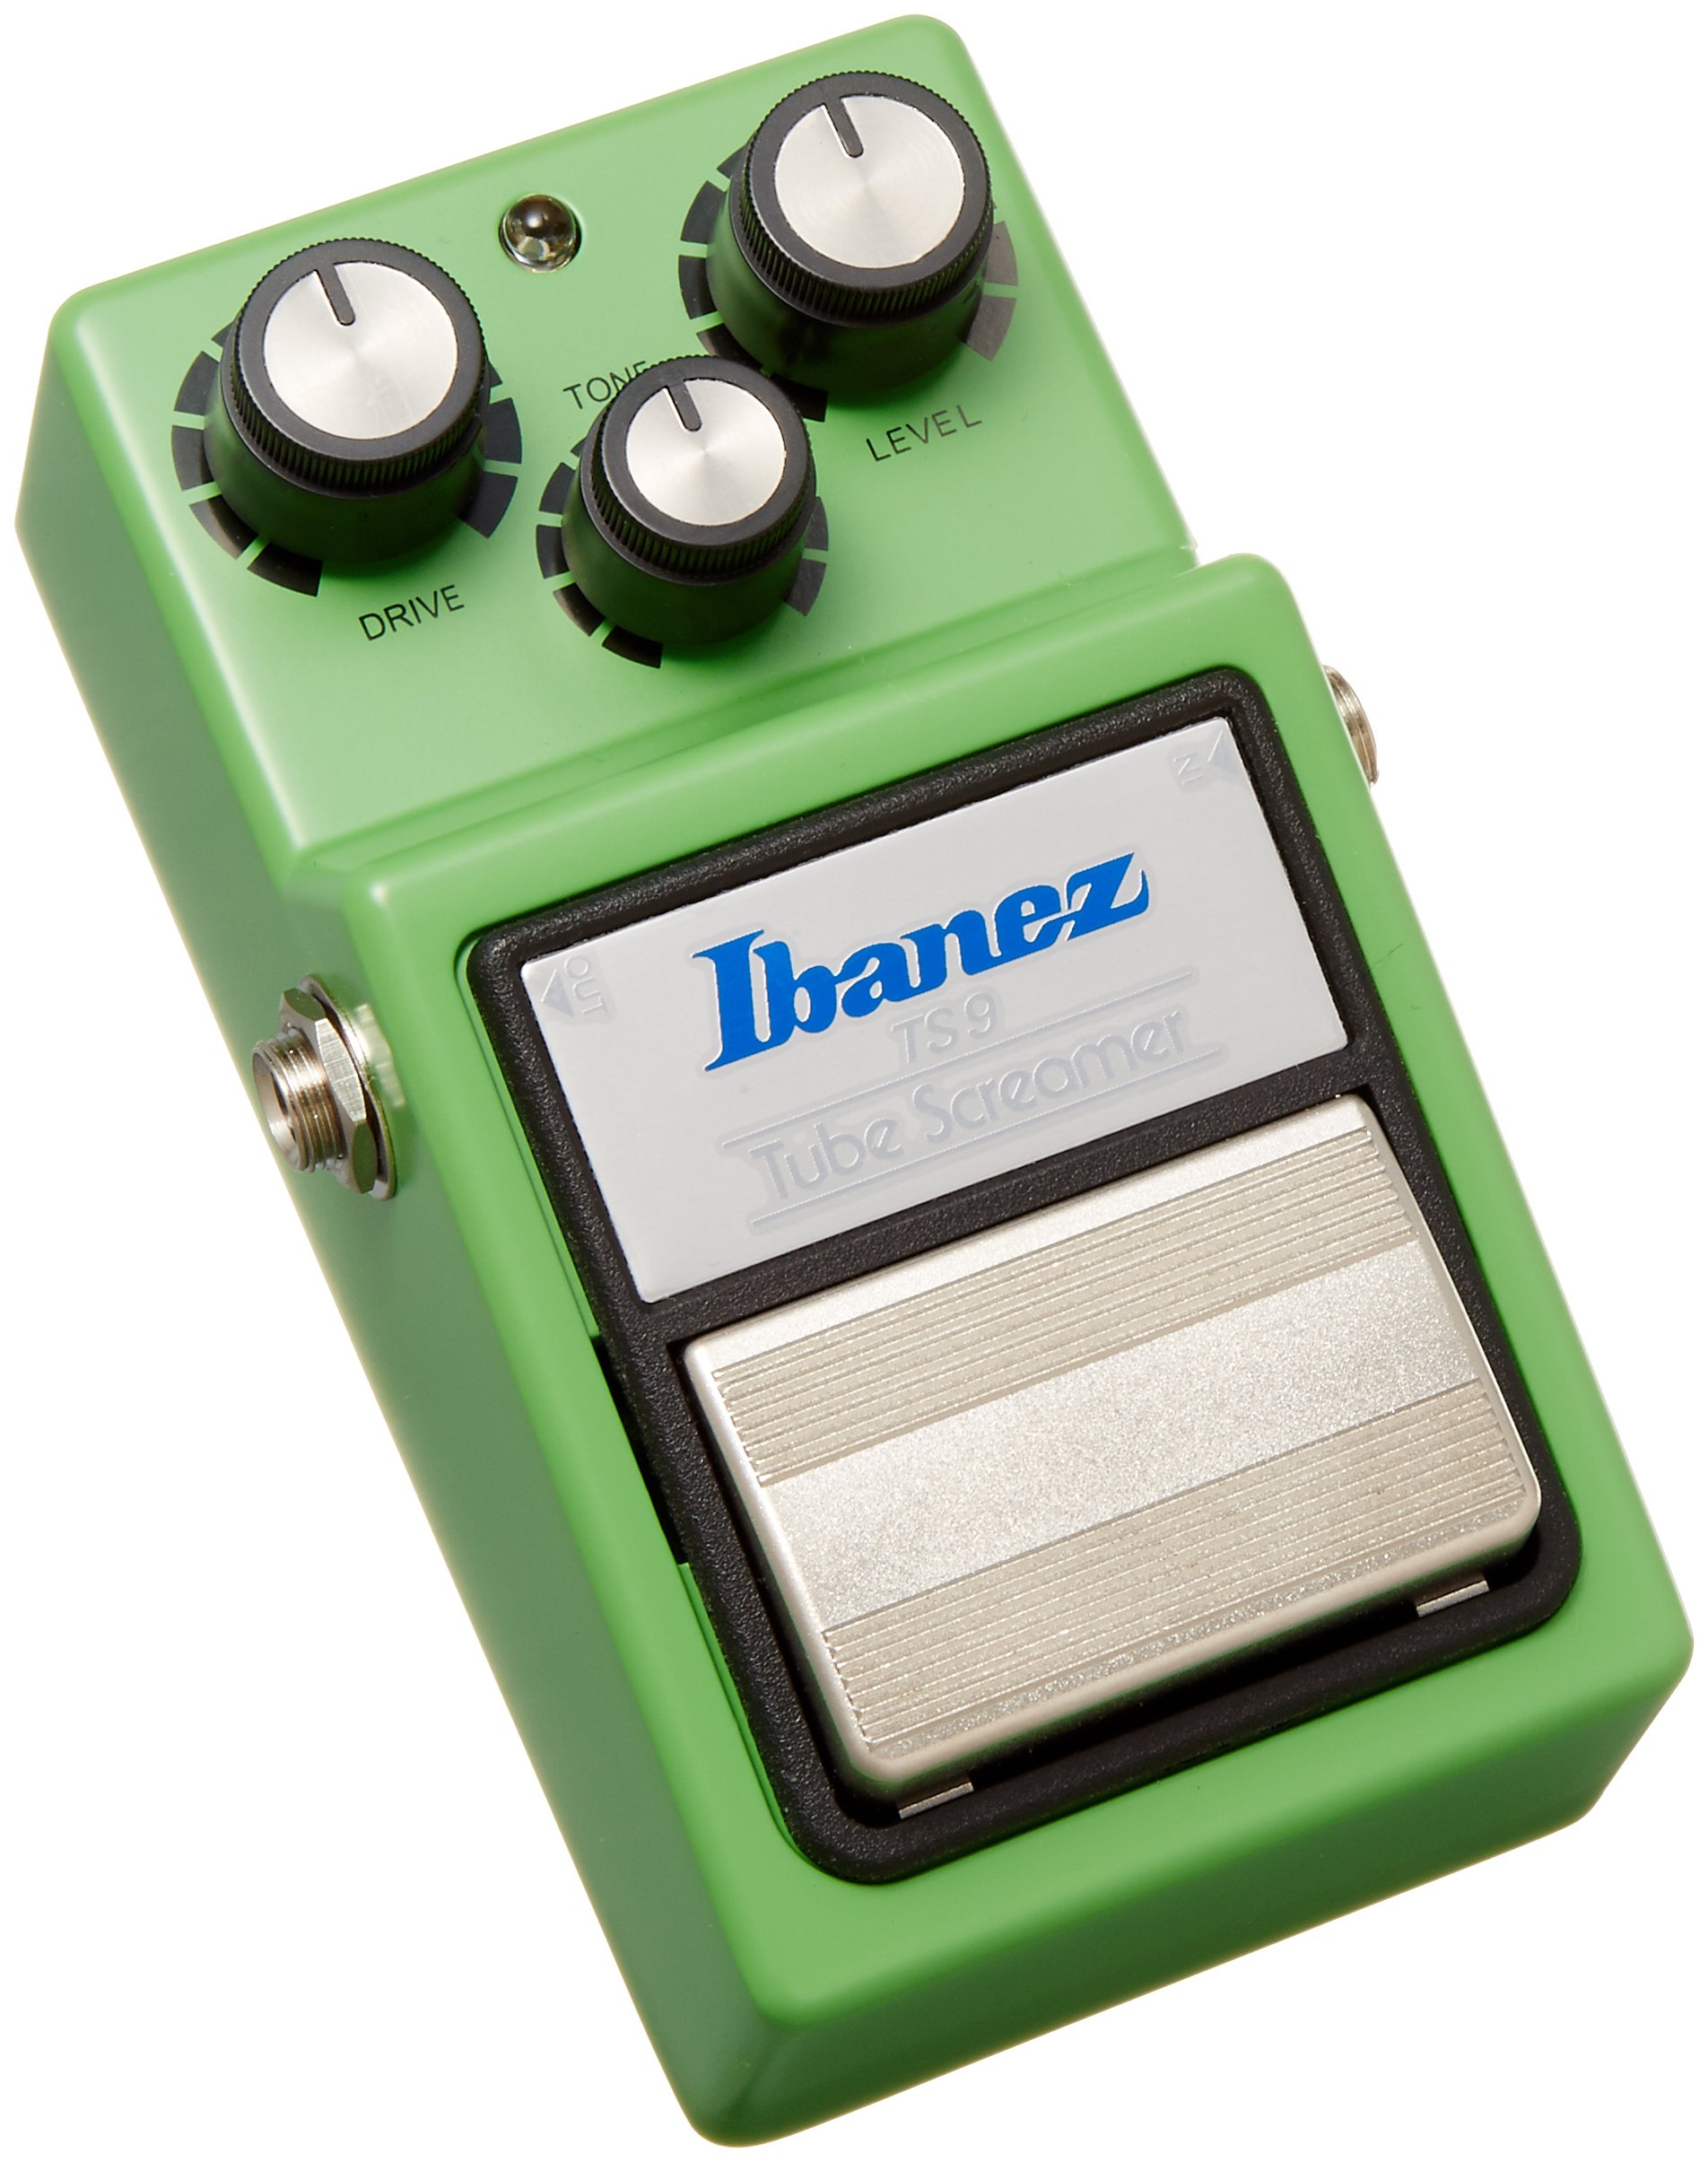 Ibanez TS9 Tube Screamer Effektgerät für Gitarre - grünes Finish